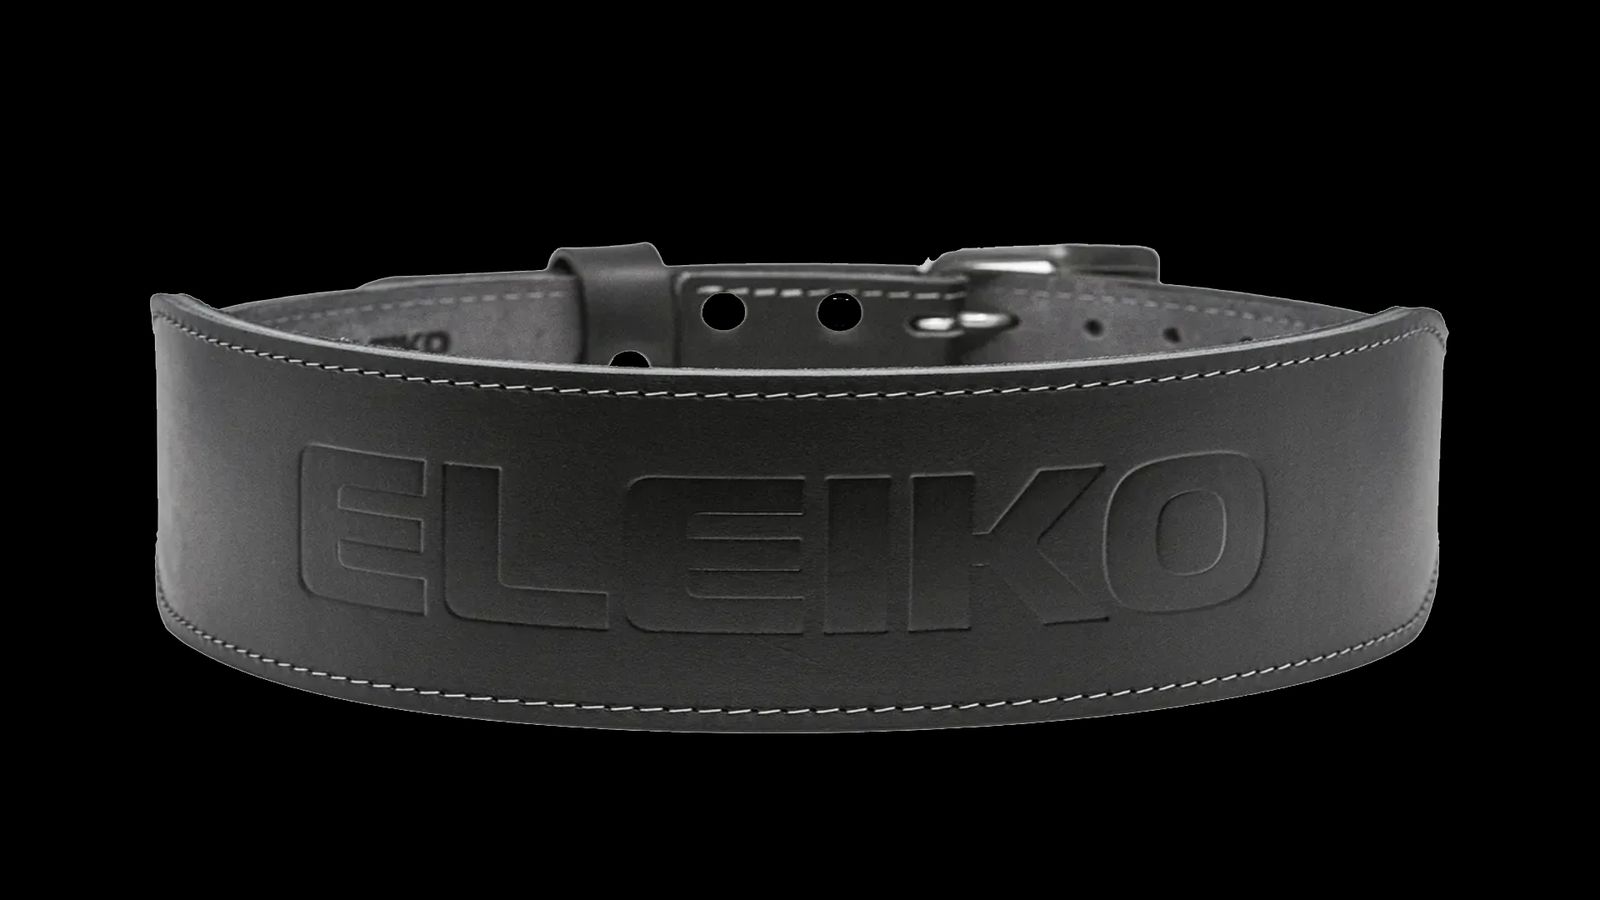 Eleiko Olympic Weightlifting Belt product image of black leather belt.